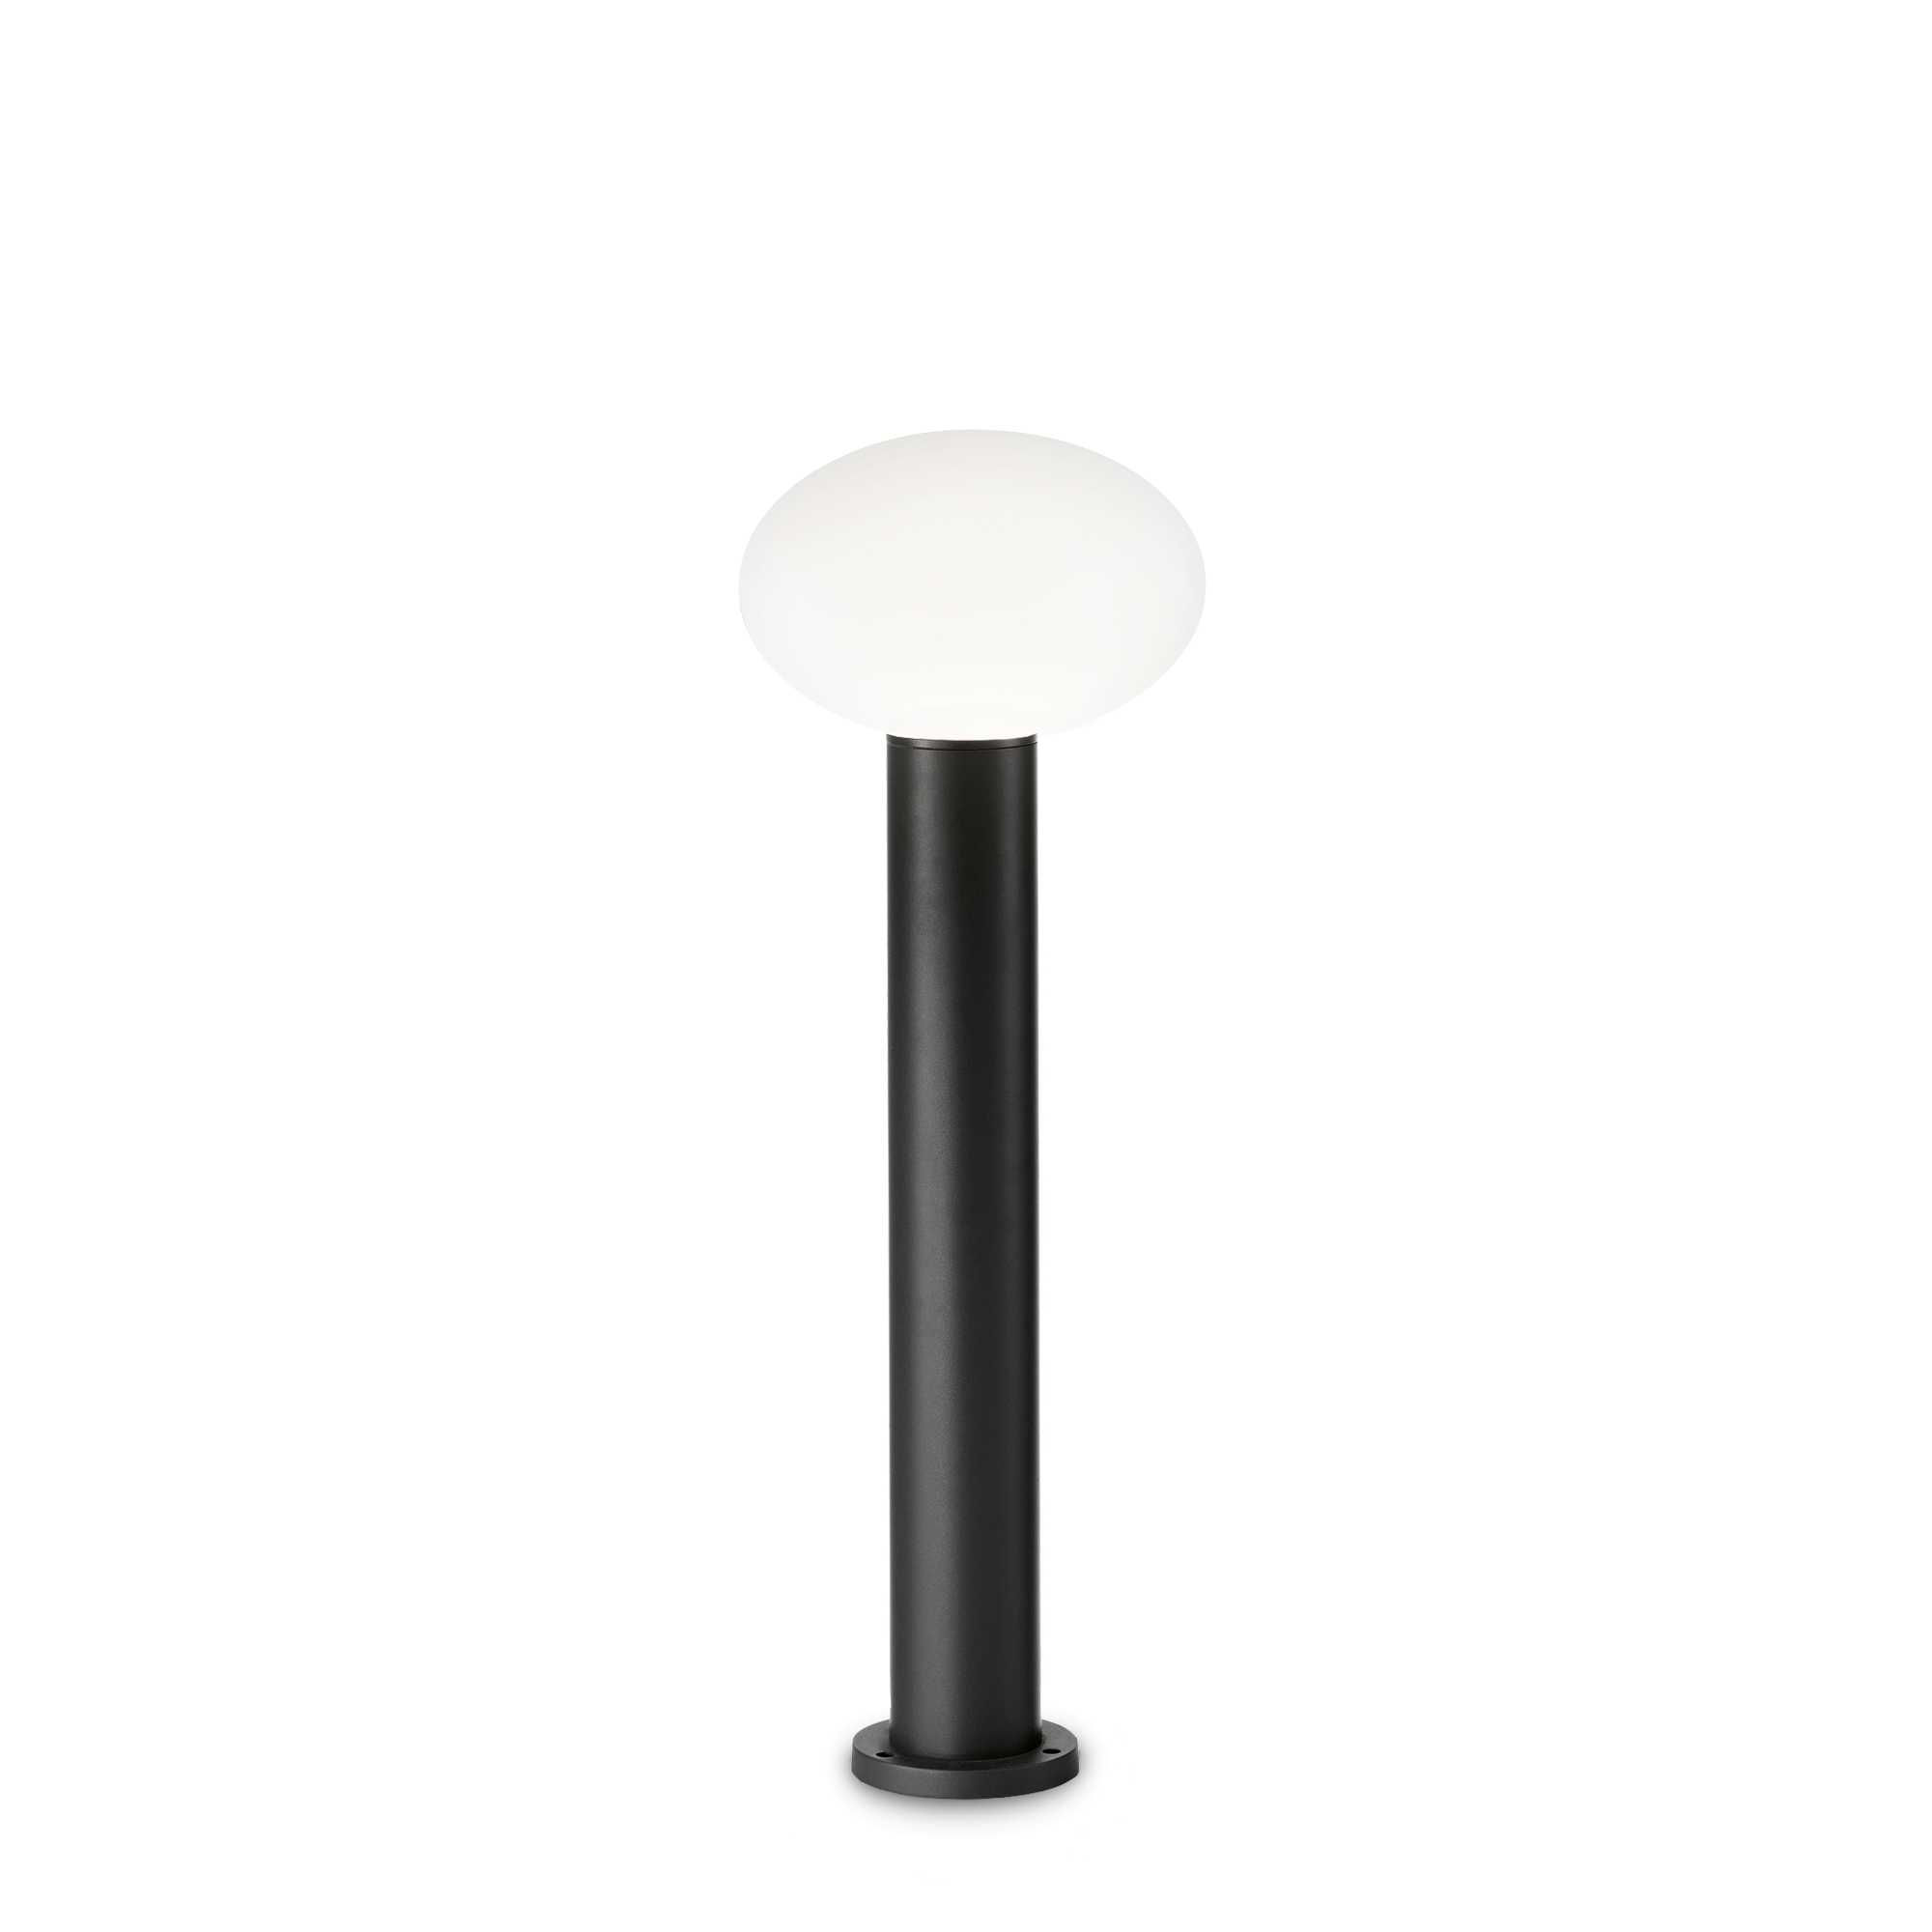 AD hotelska oprema Vanjska podna lampa Clio mpt1- Crne boje slika proizvoda